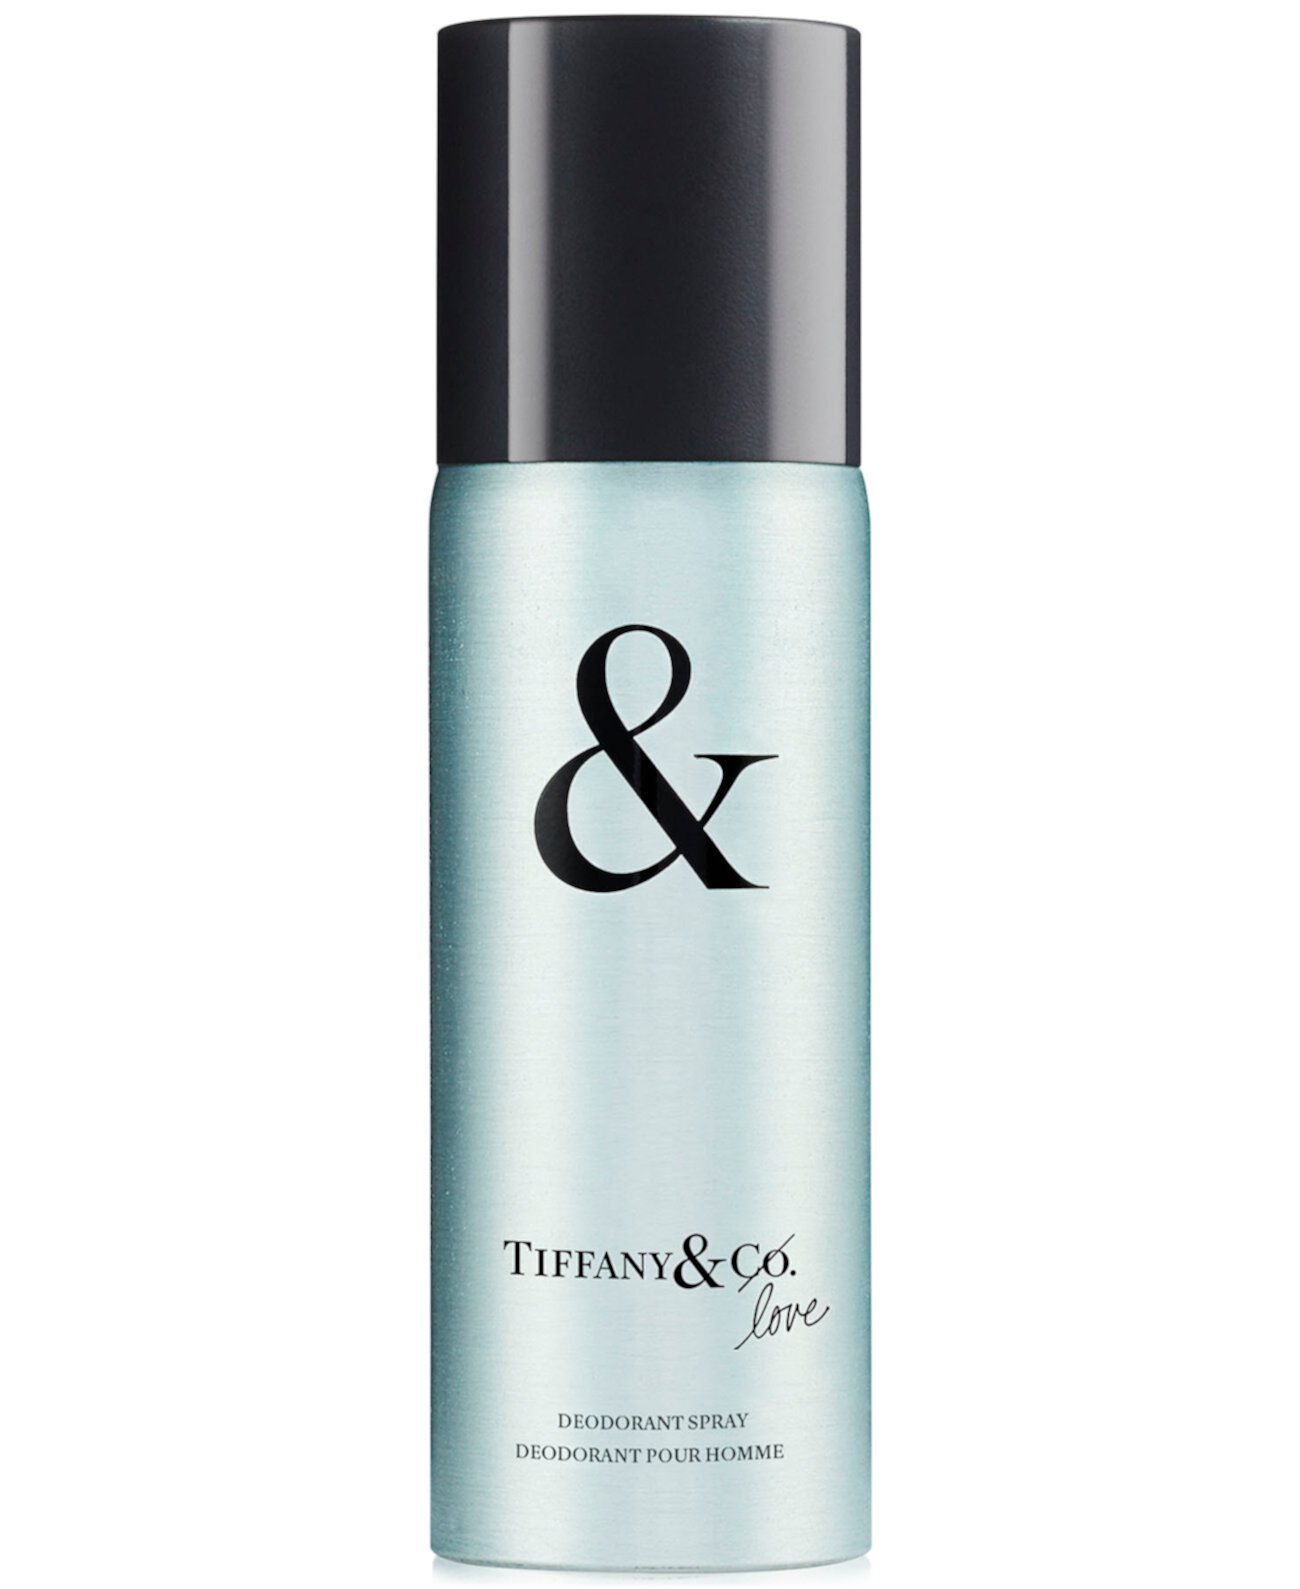 Мужской дезодорант-спрей Tiffany & Love, 5 унций. Tiffany & Co.